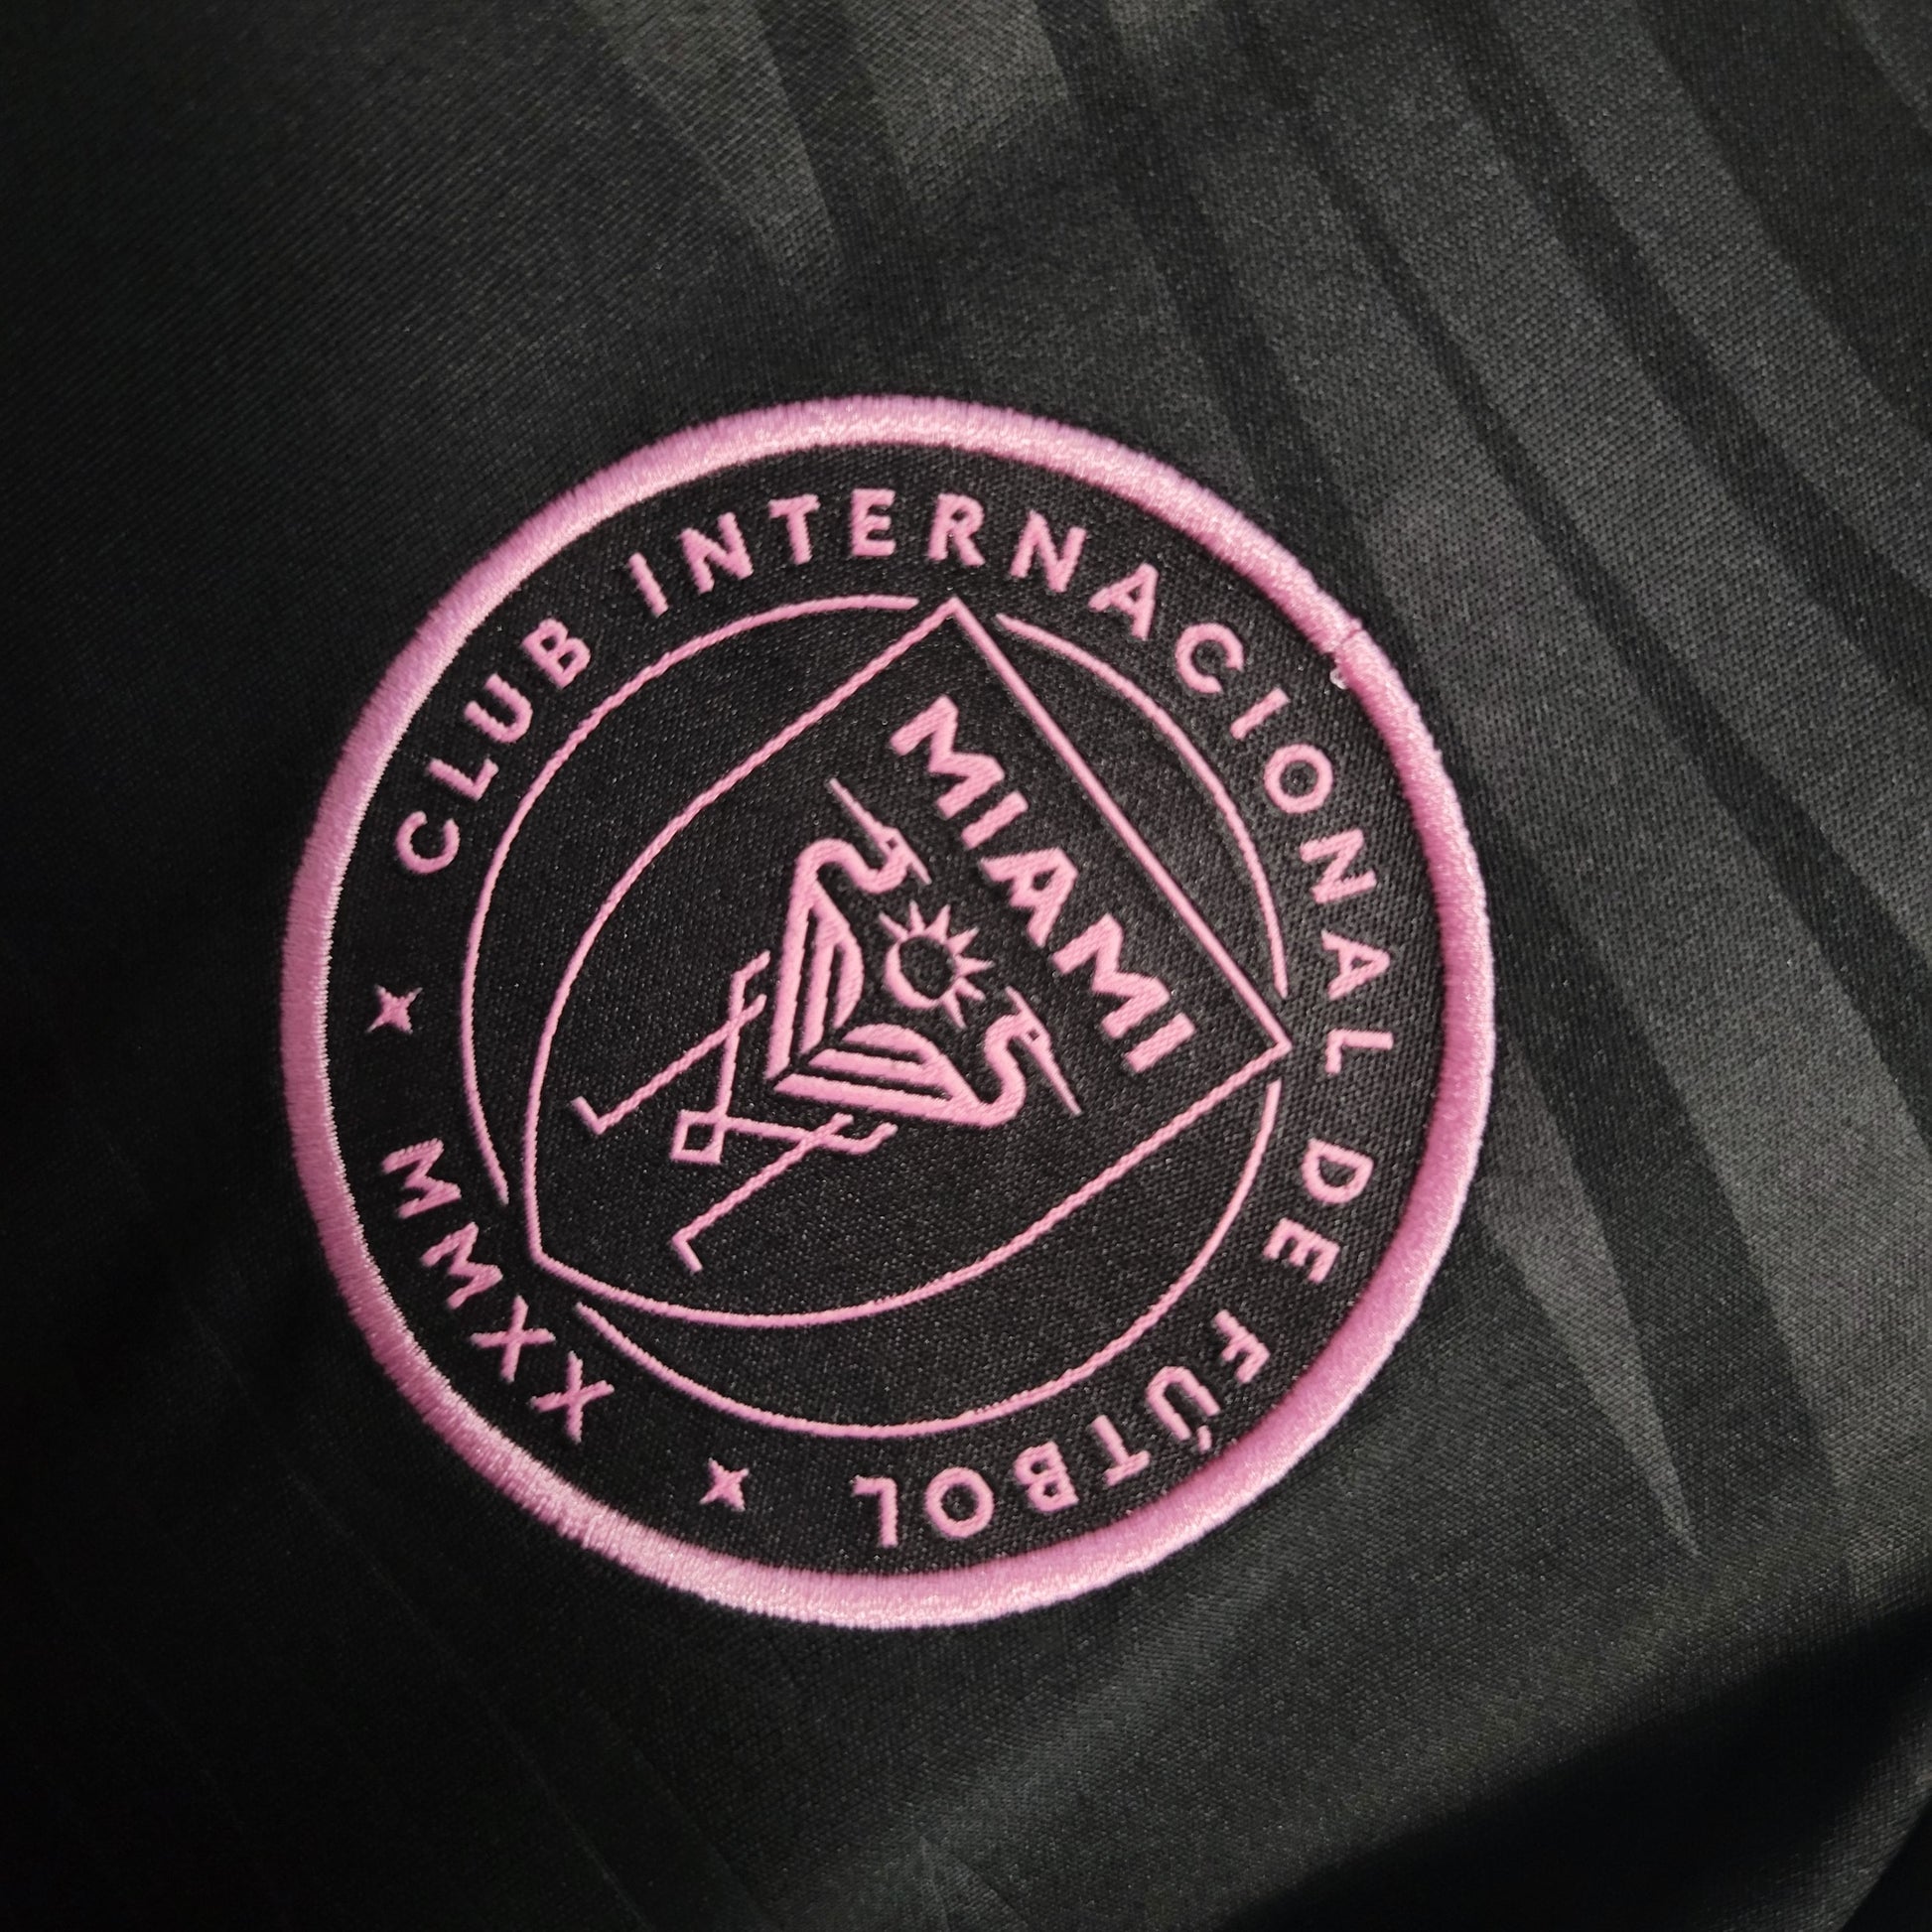 Inter Miami CF Unveils Club's New Away Jersey, La Noche, Ahead of